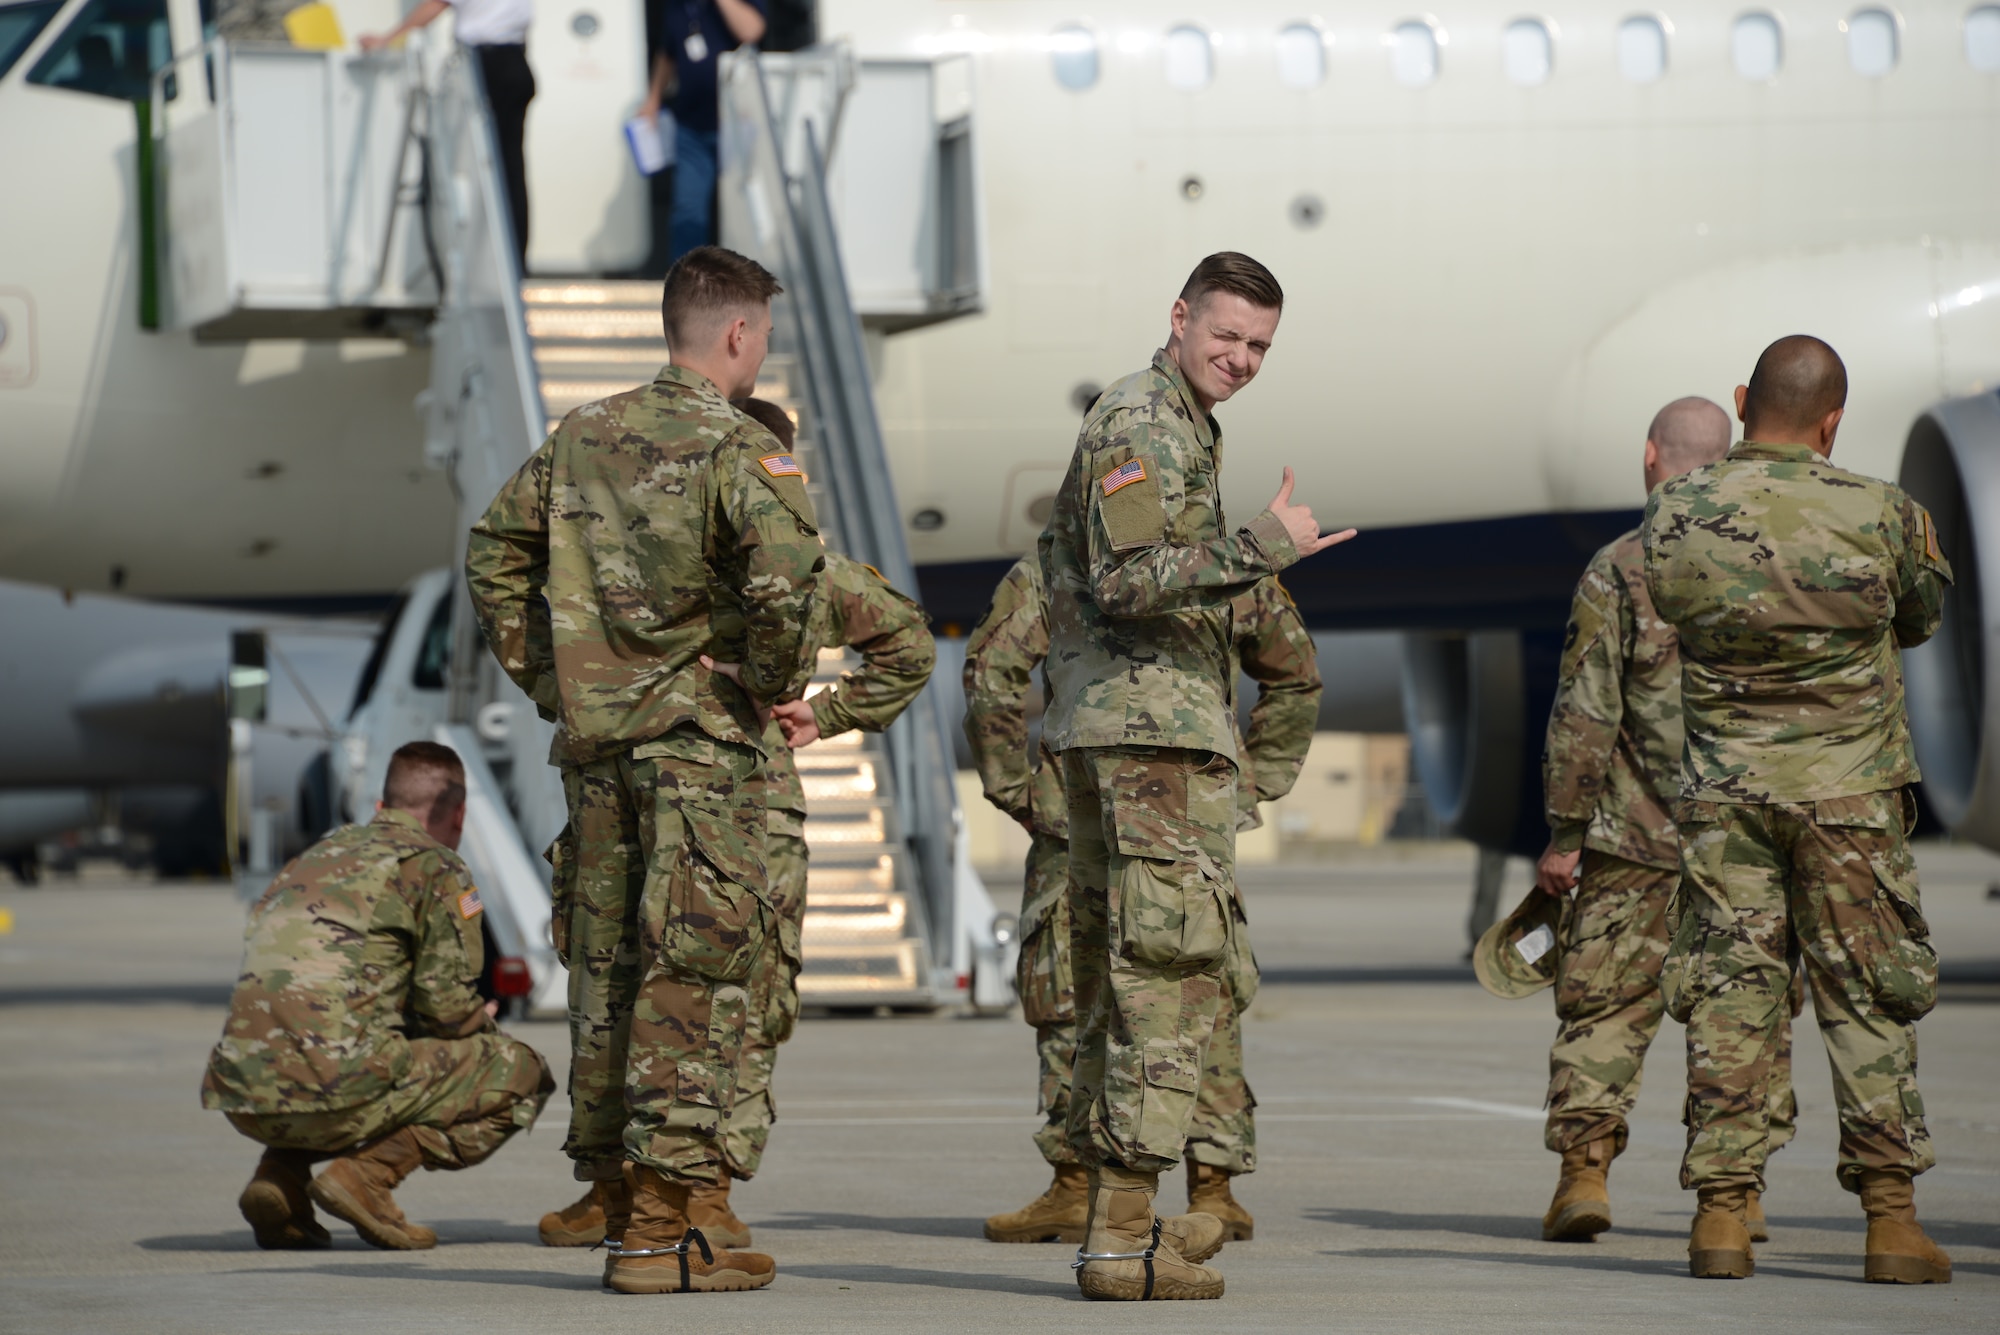 HHT 1/113th Cav Iowa National Guard departs Sioux City